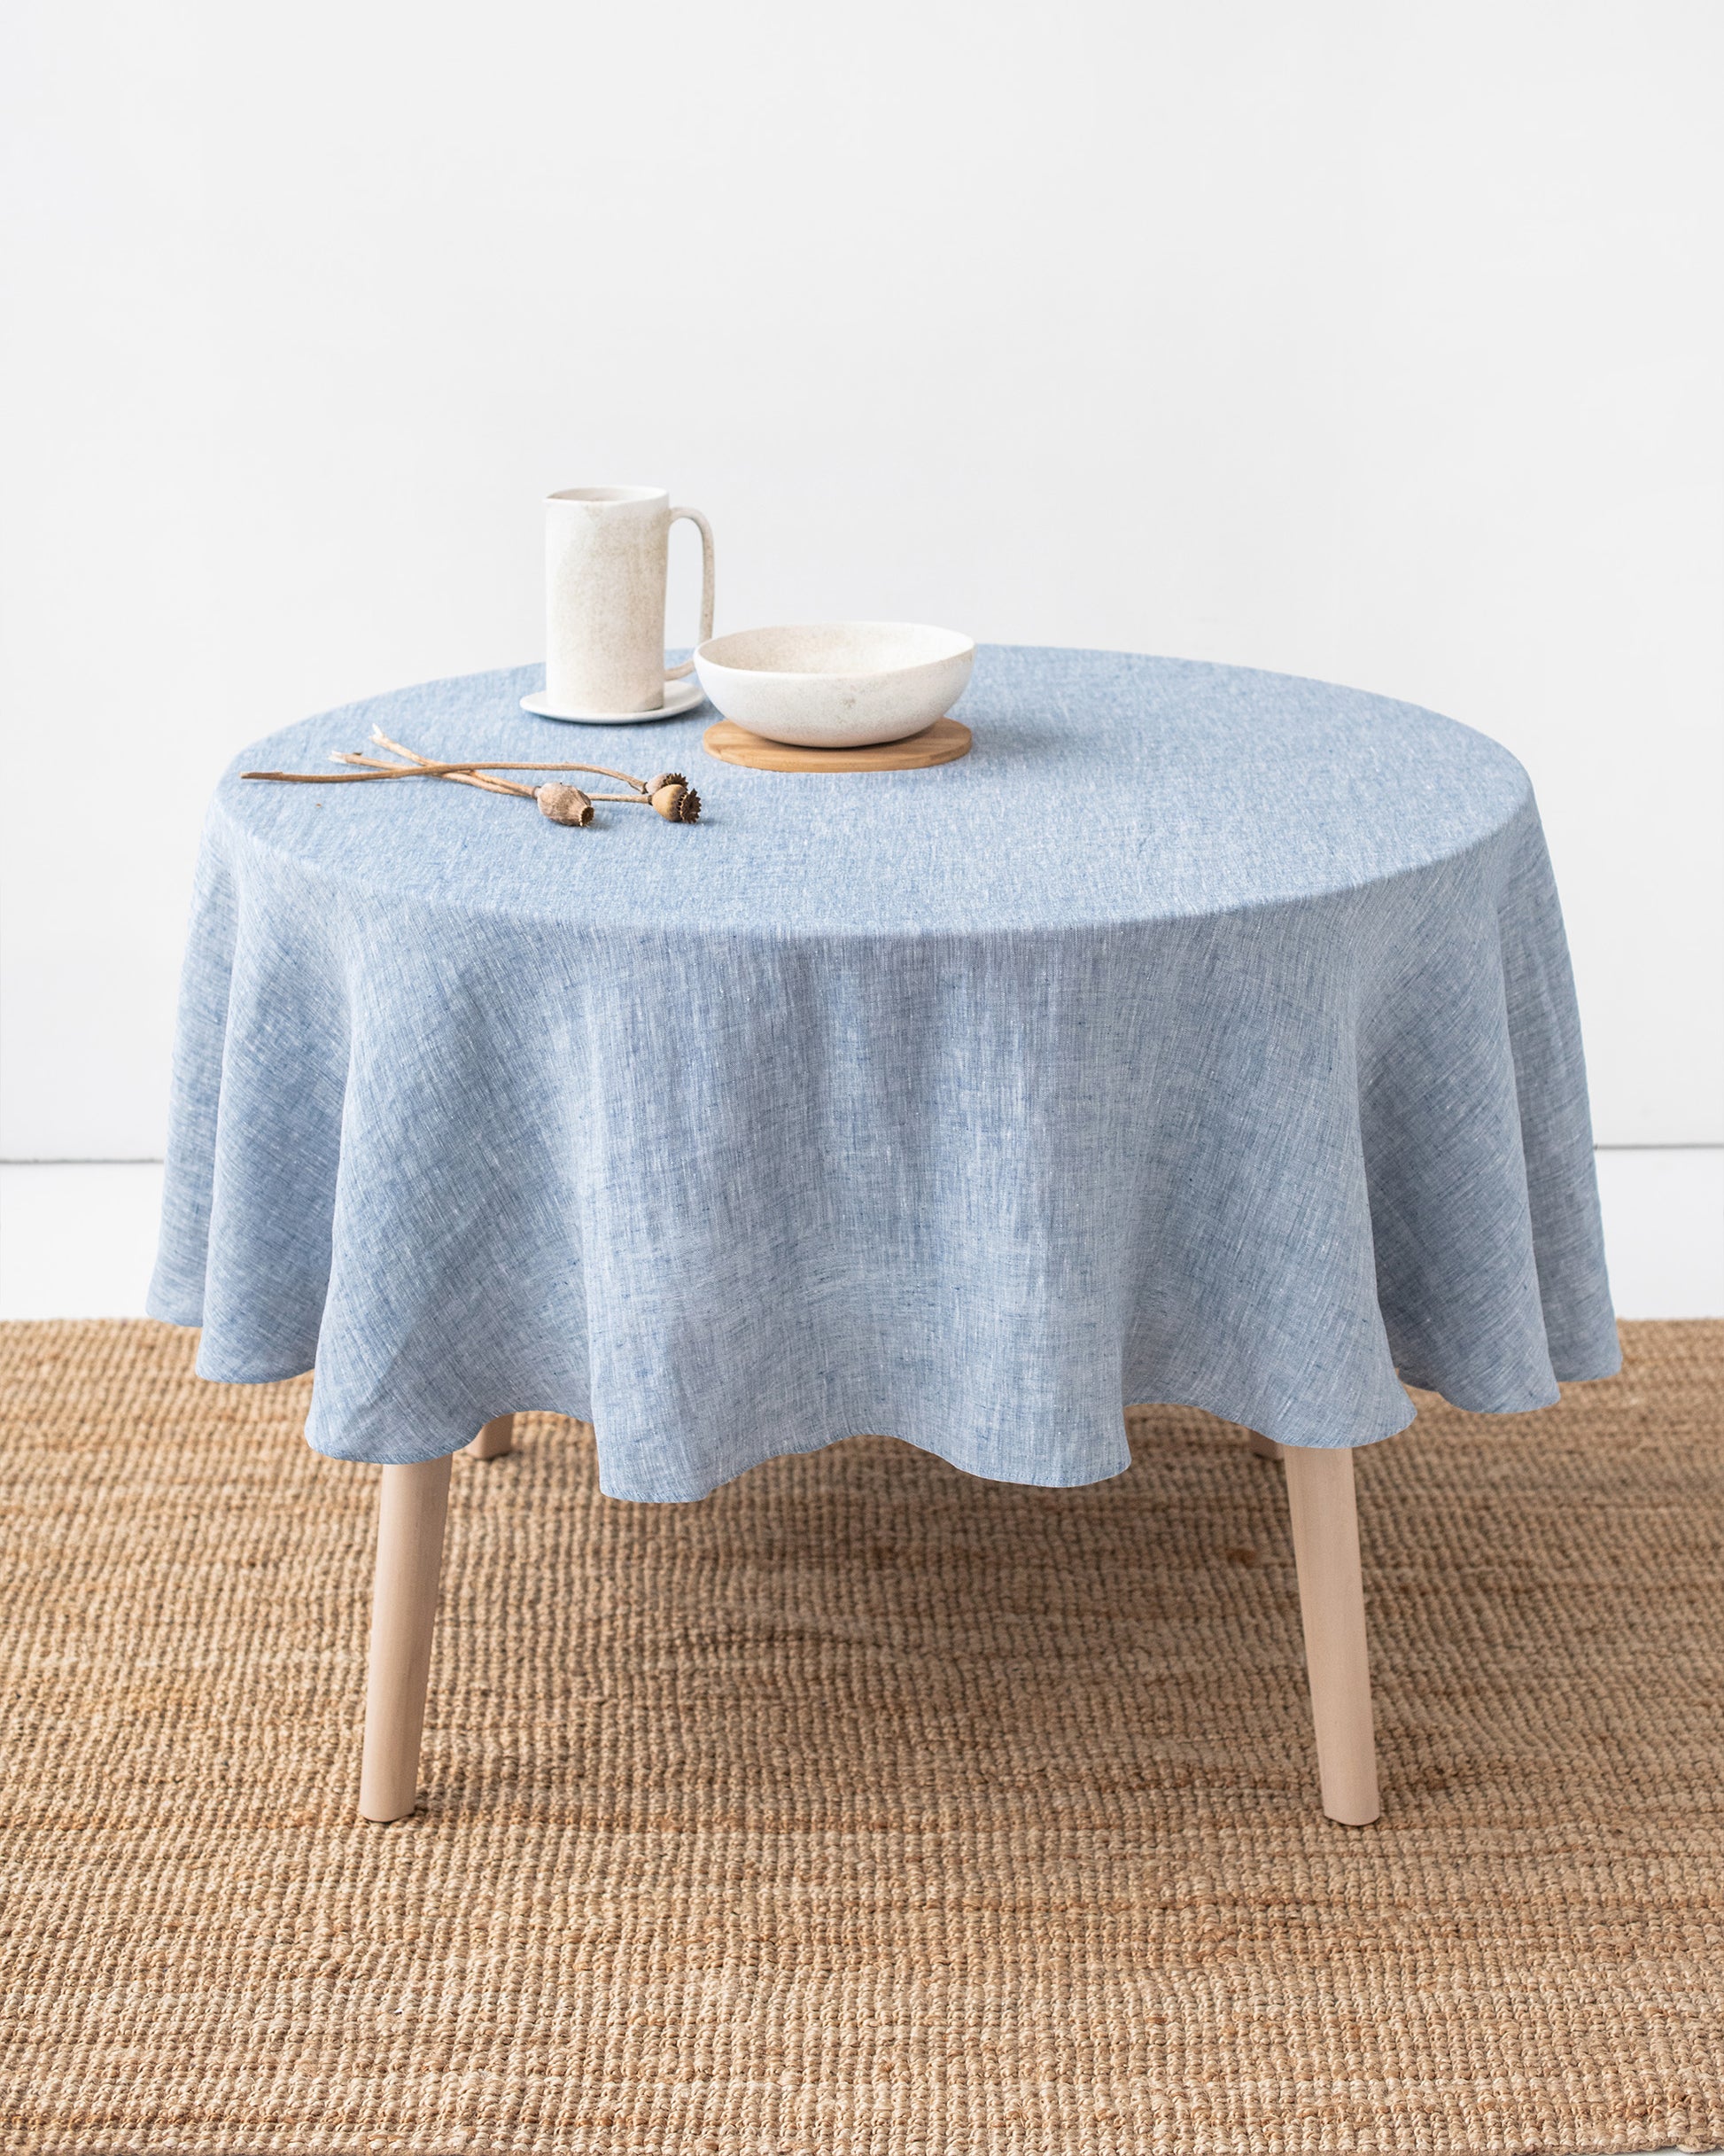 Round linen tablecloth in Blue melange - MagicLinen